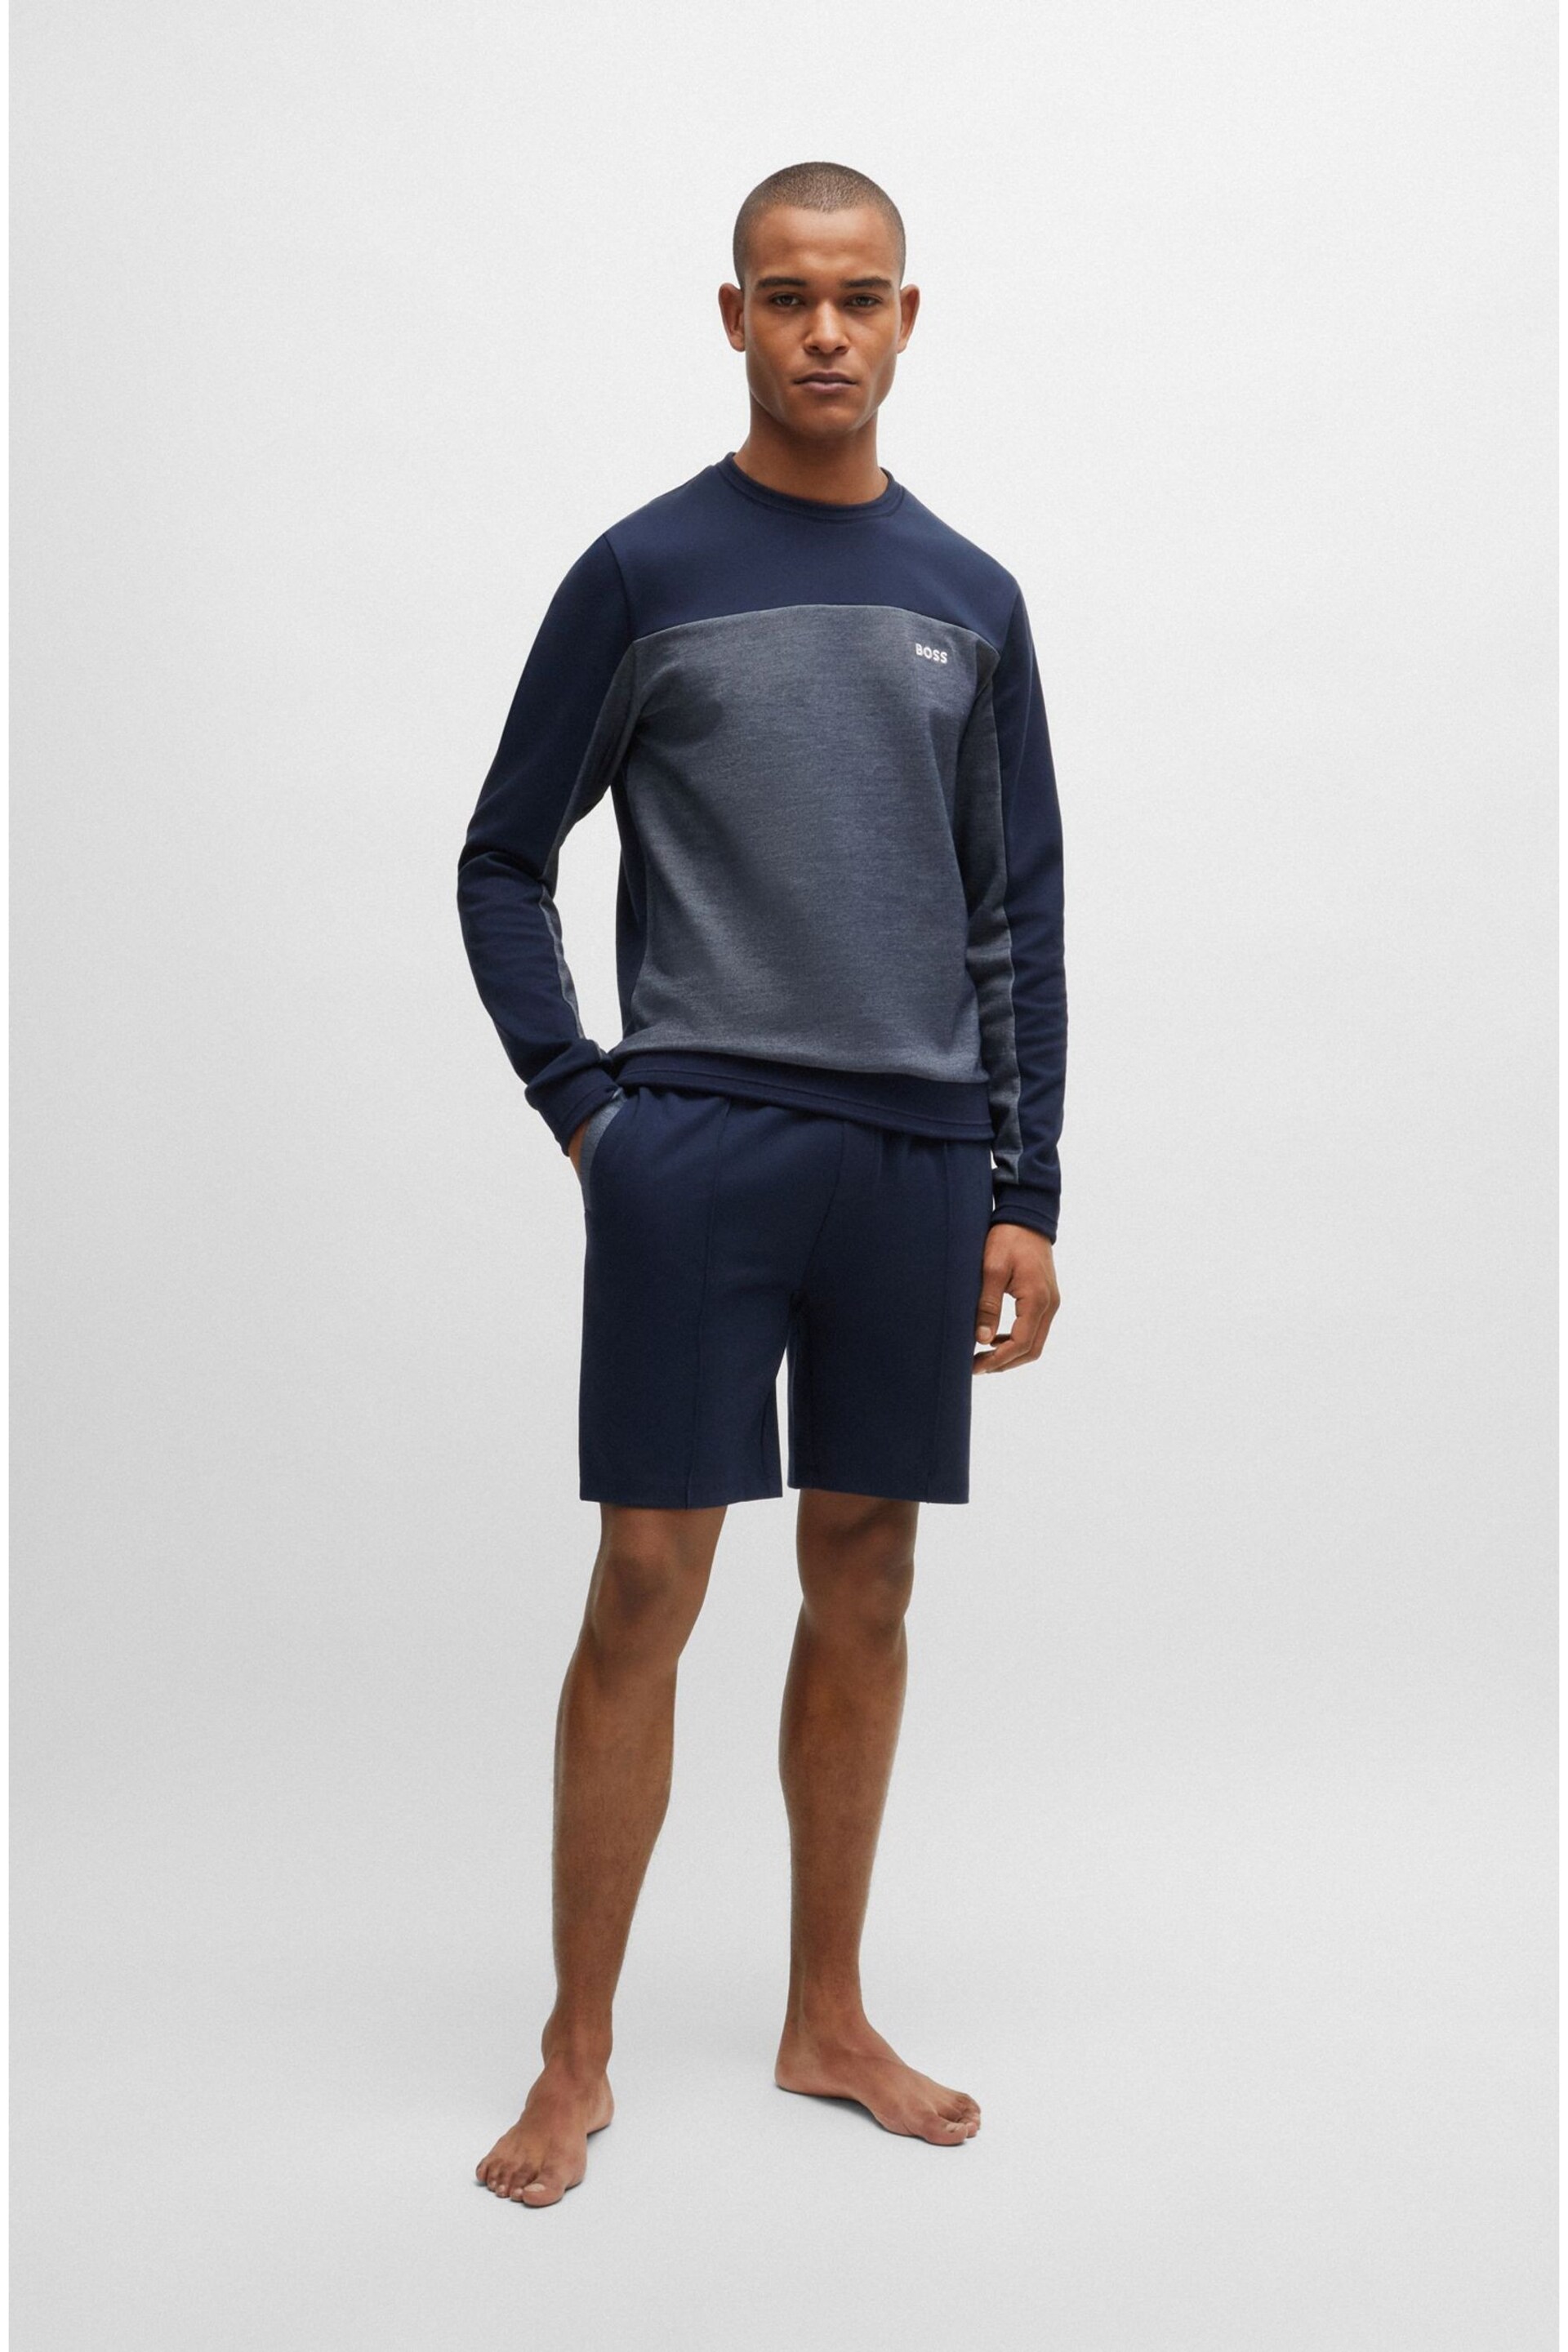 BOSS Blue Drawstring Cotton Pique Blend Jersey Shorts - Image 2 of 5